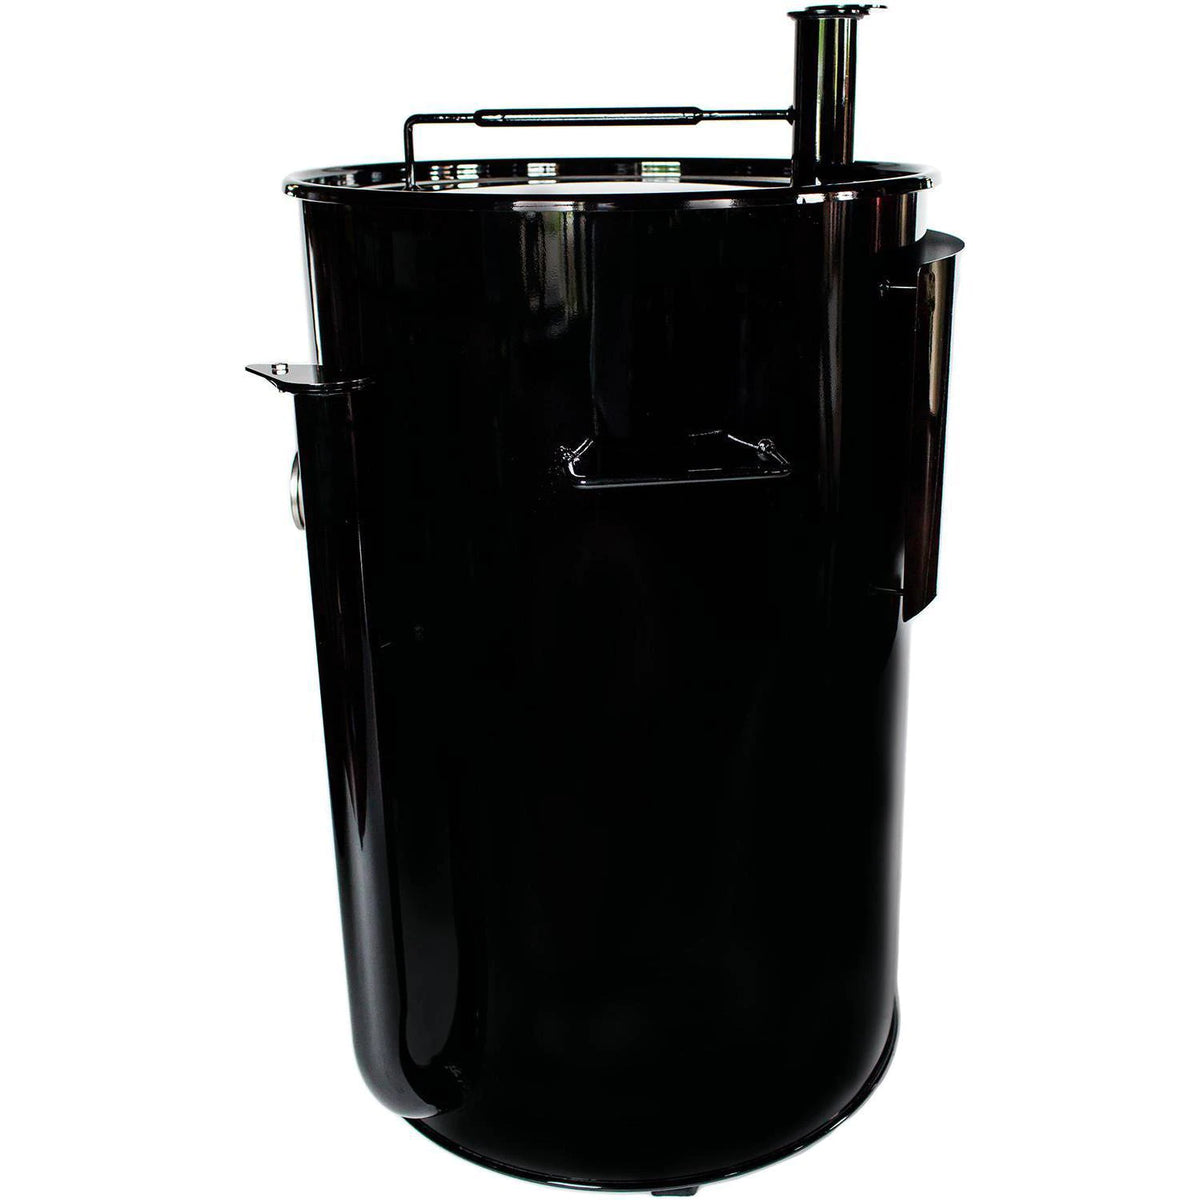 Gateway Drum Smokers 55111 55 Gallon Charcoal BBQ Smoker - Black - Left Side